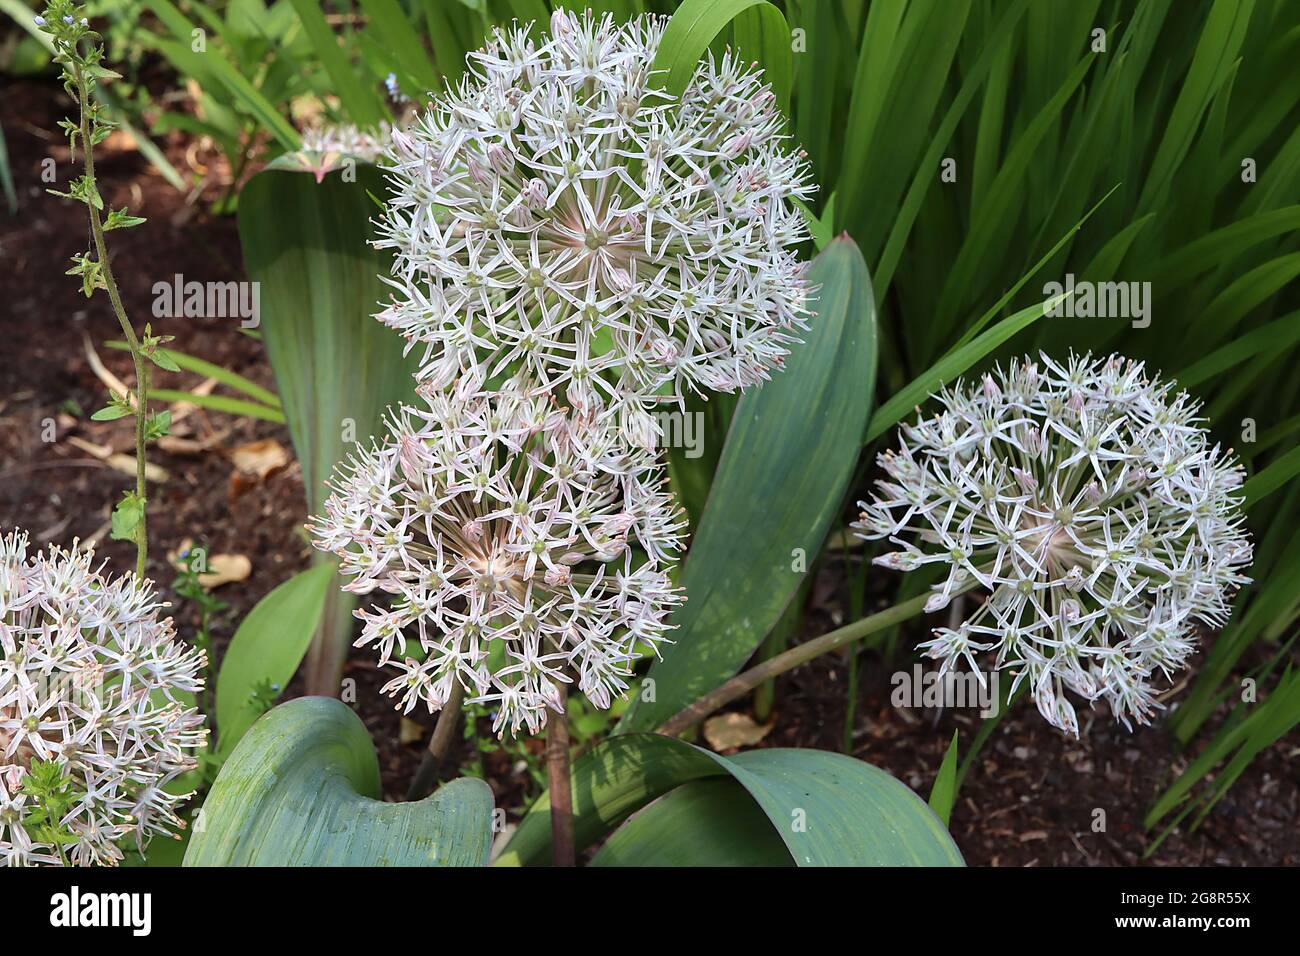 Allium karataviense ‘Ivory Queen’ Kara Tau garlic - spherical umbel of white star-shaped flowers, very slender petals,  May, England, UK Stock Photo